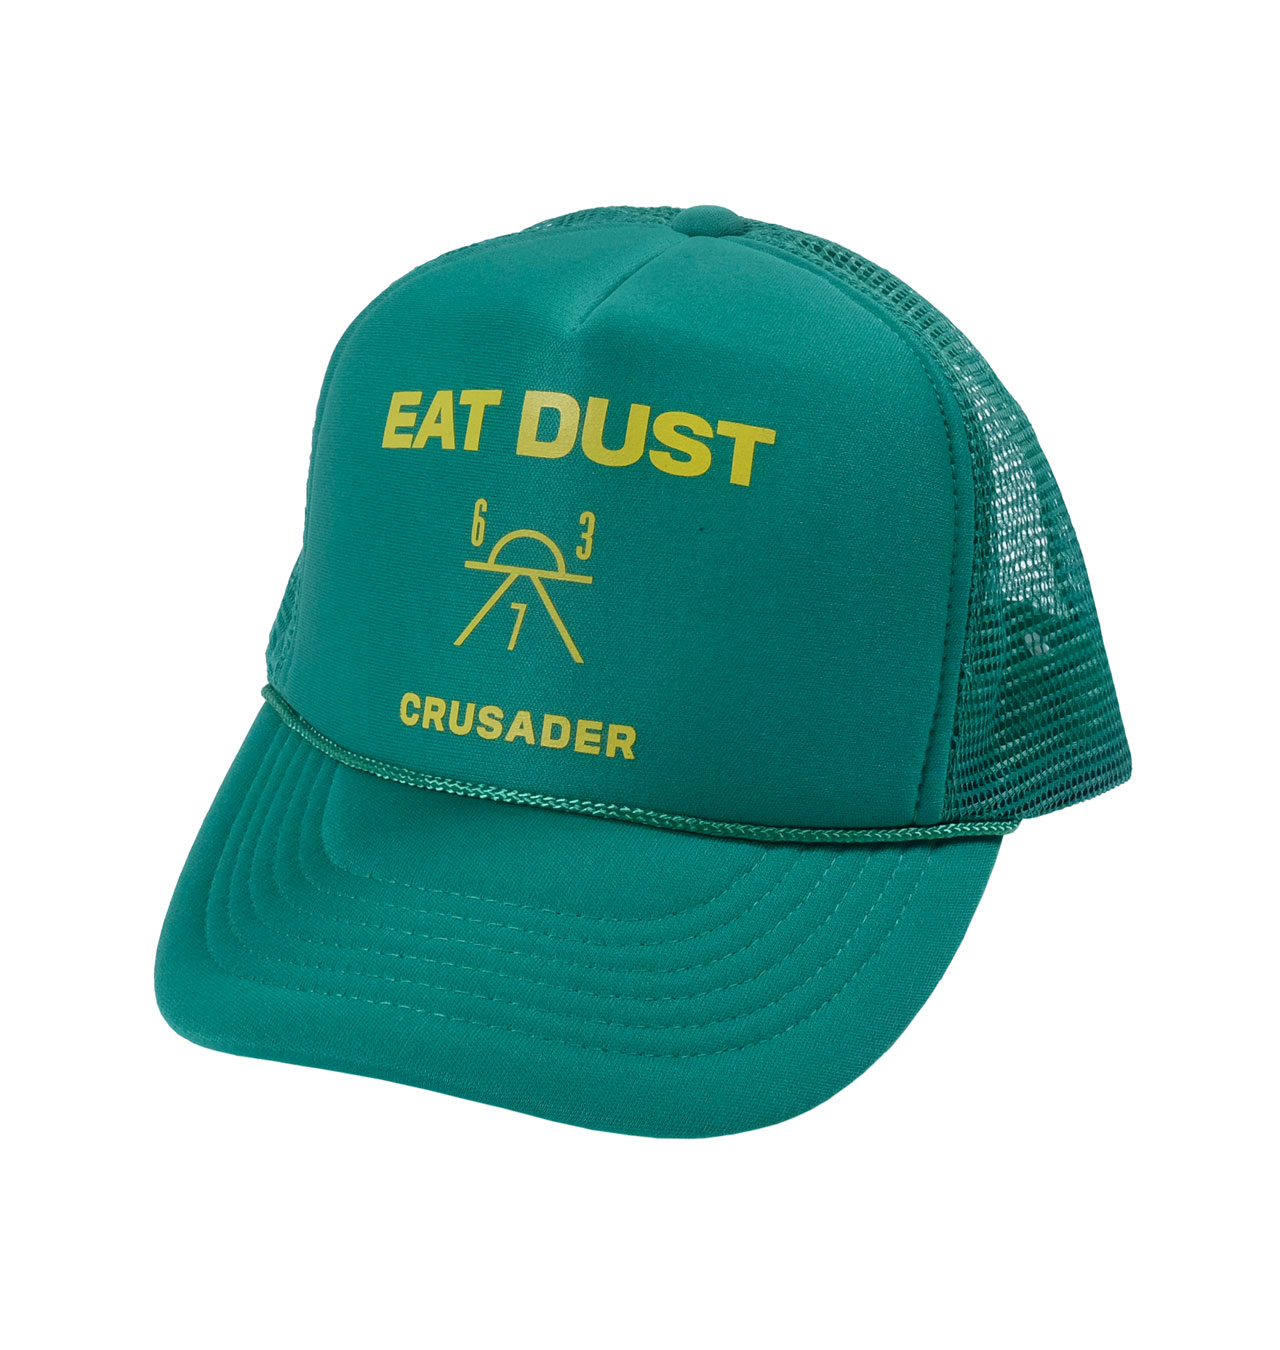 Eat Dust - Crusader Trucker Cap - Green